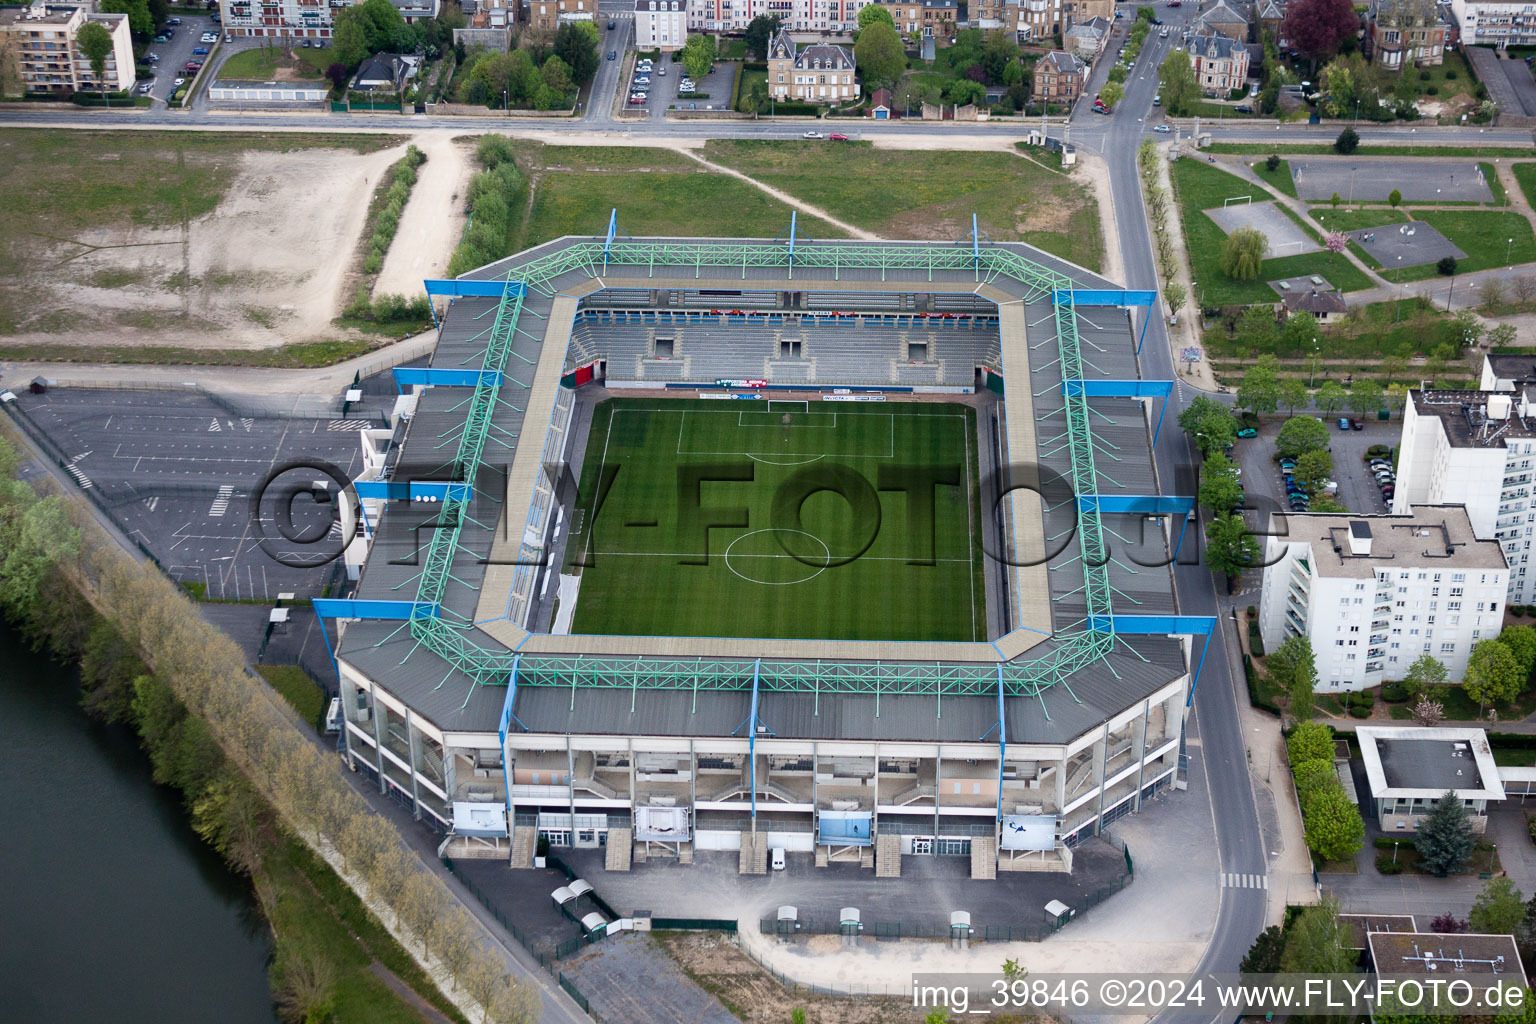 Sports facility grounds of the Arena stadium Stade Louis Dugauguez Boulevard de Lattre de Tassigny in Sedan in Alsace-Champagne-Ardenne-Lorraine, France